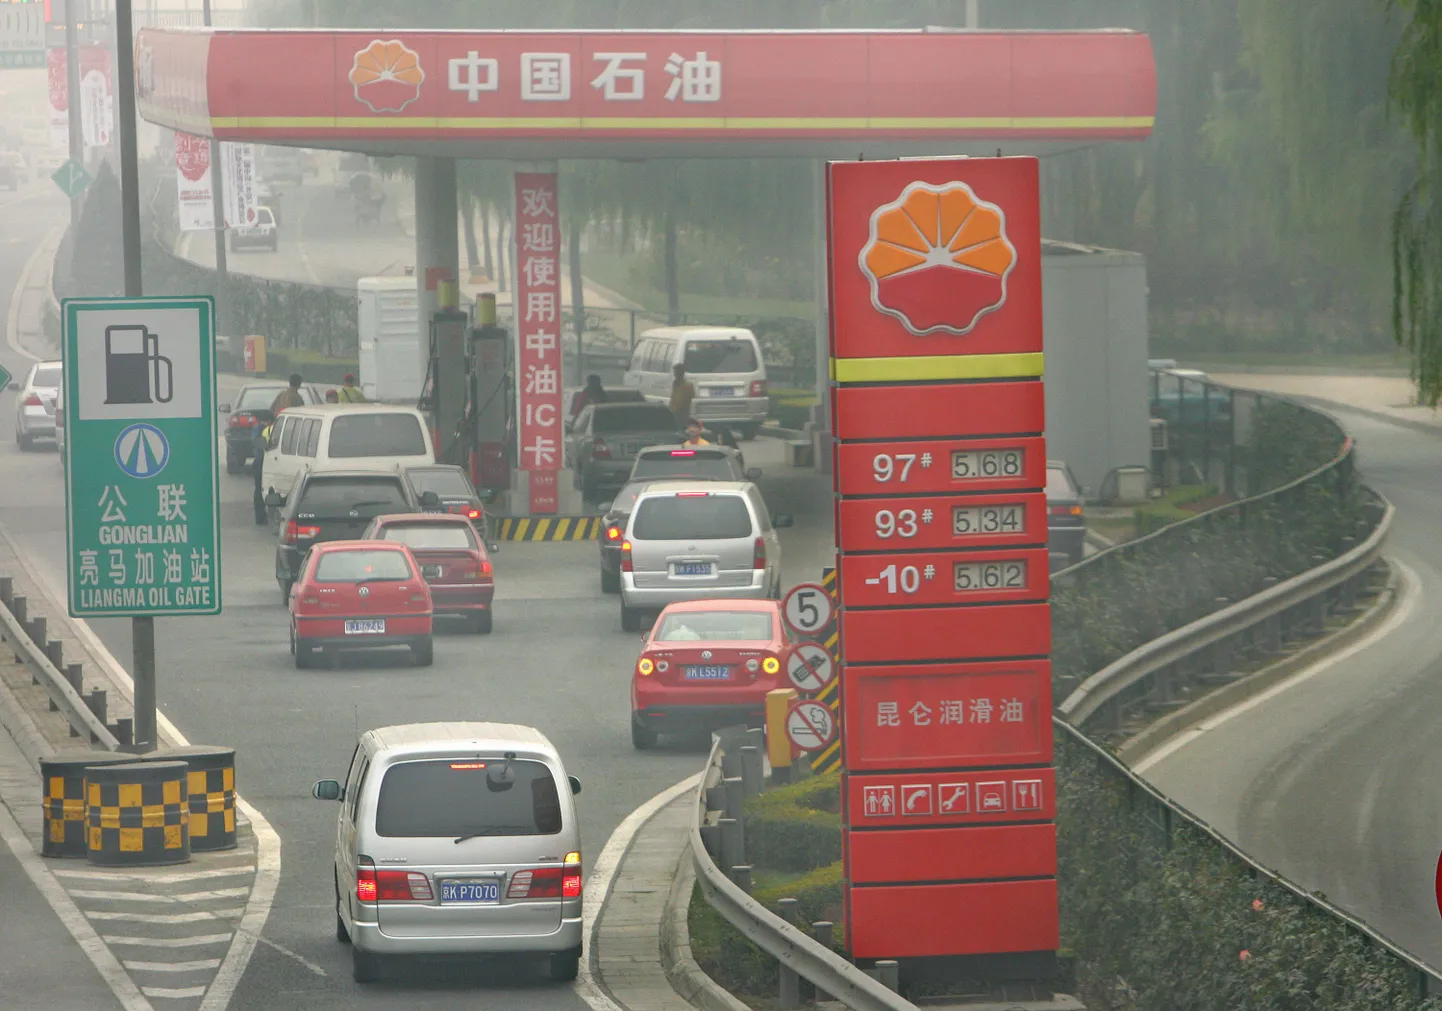 PetroChina tankla Pekingis.